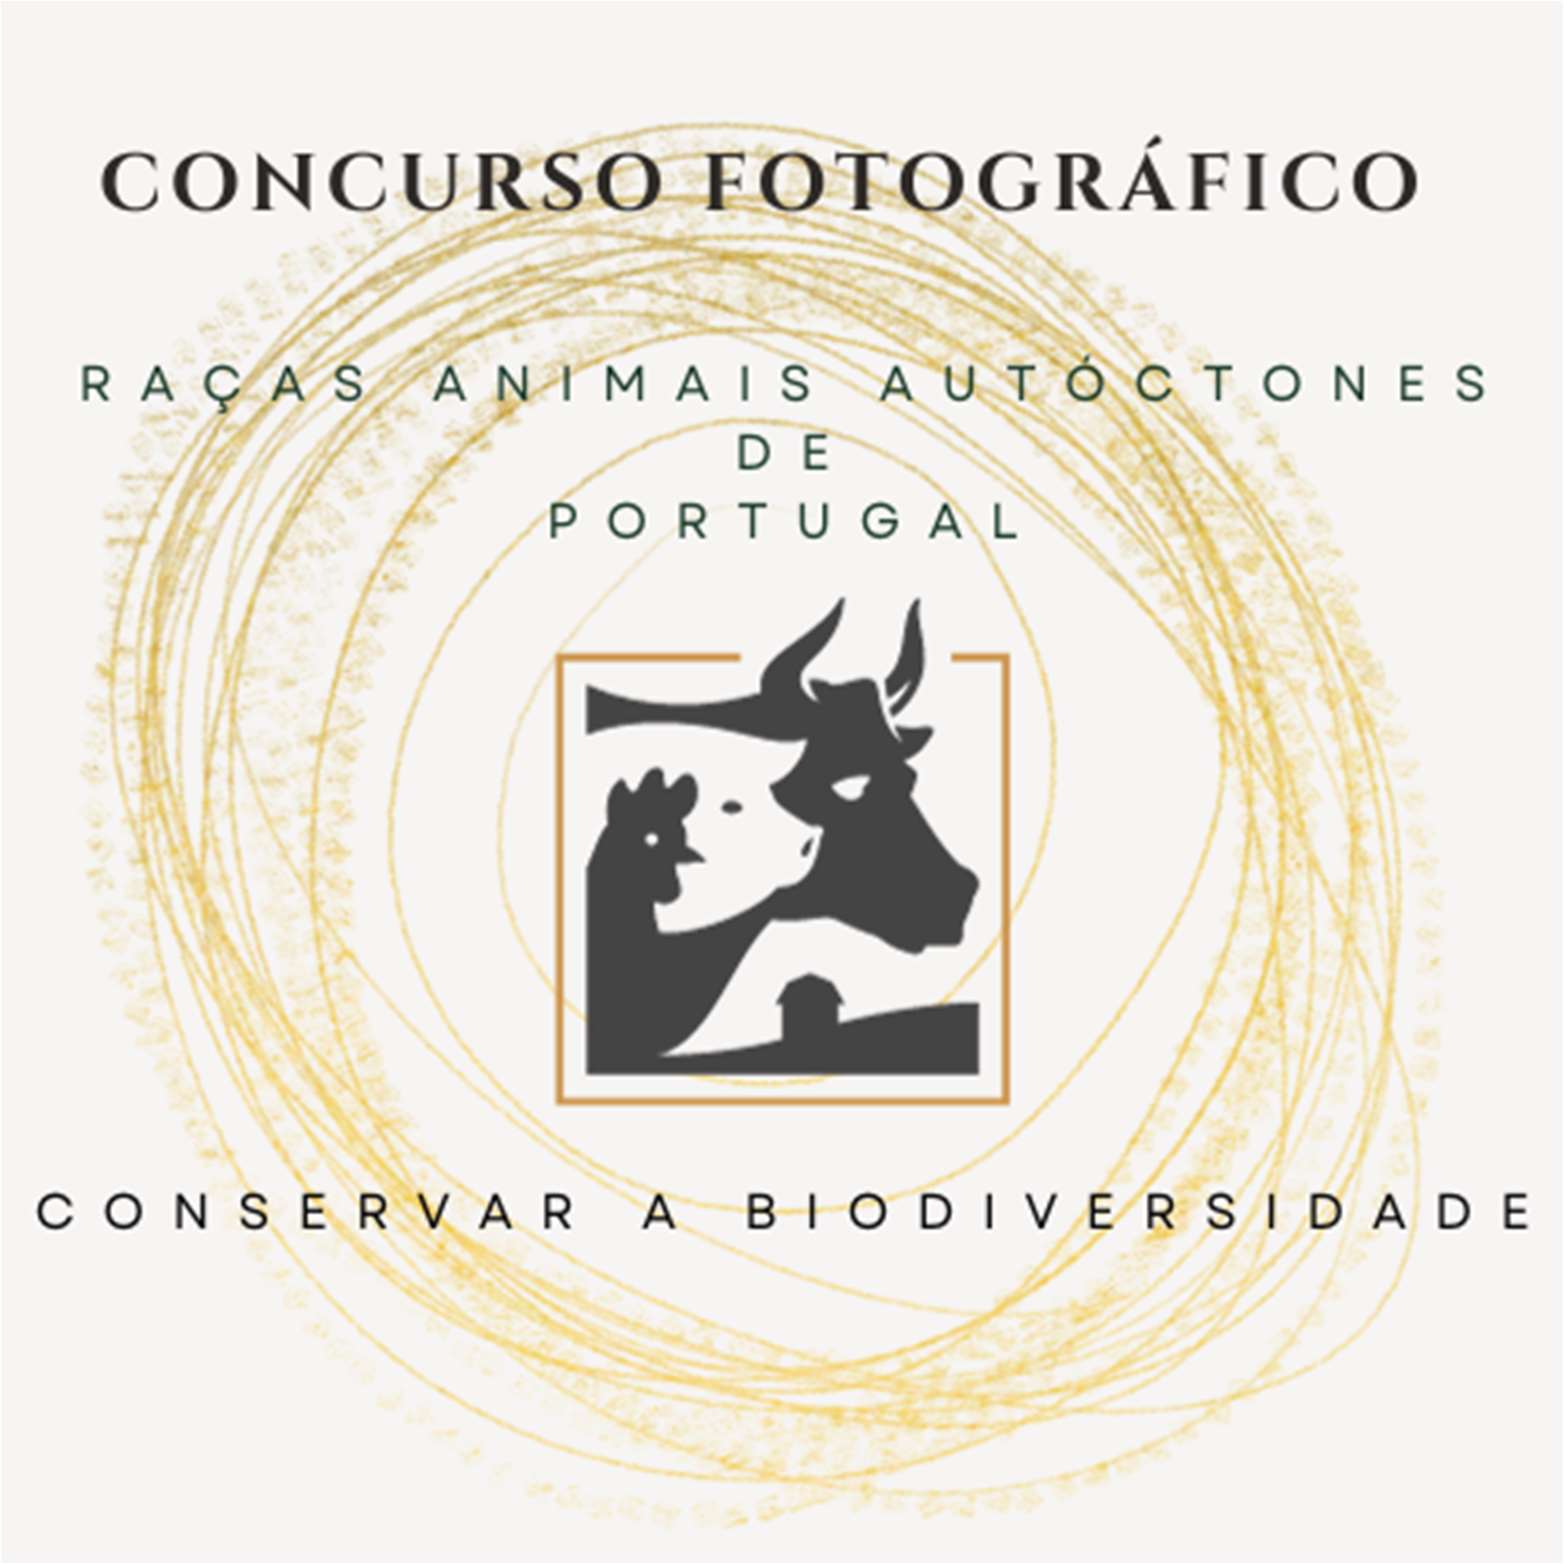 Nota Imprensa ConcursoFotografico RacasAutoctones